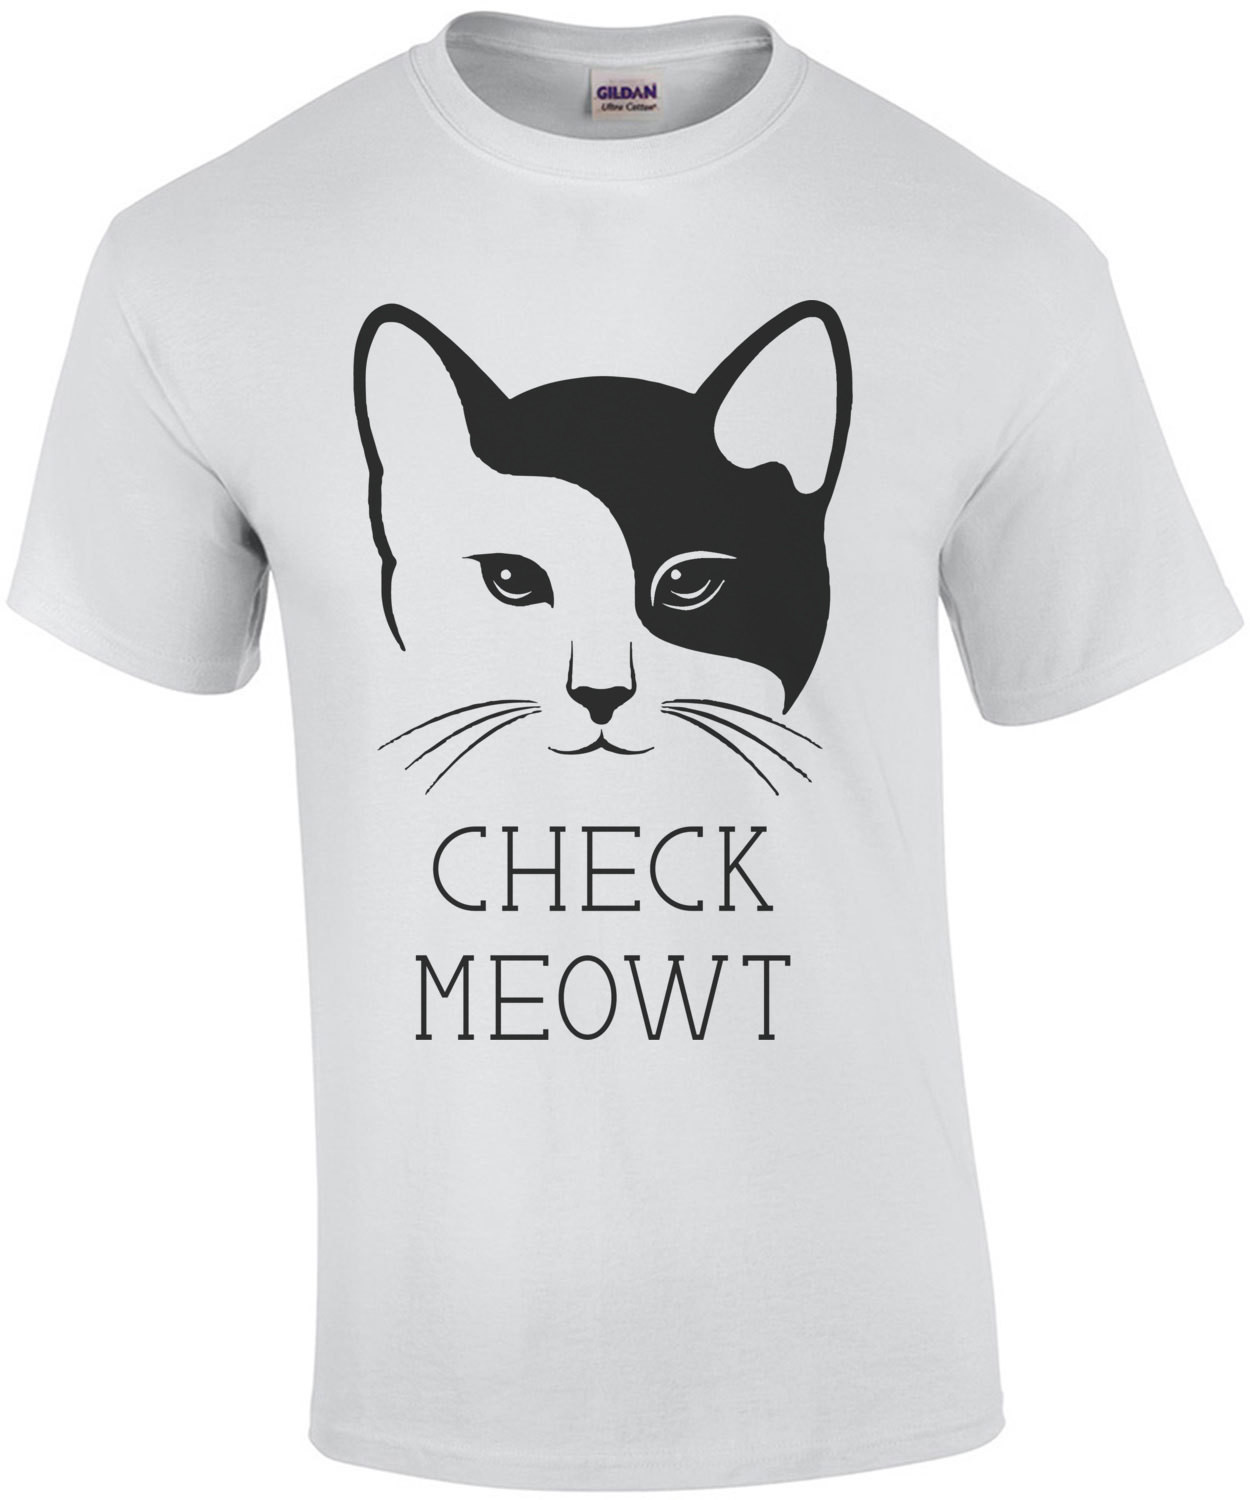 Check Meowt - Funny cat t-shirt